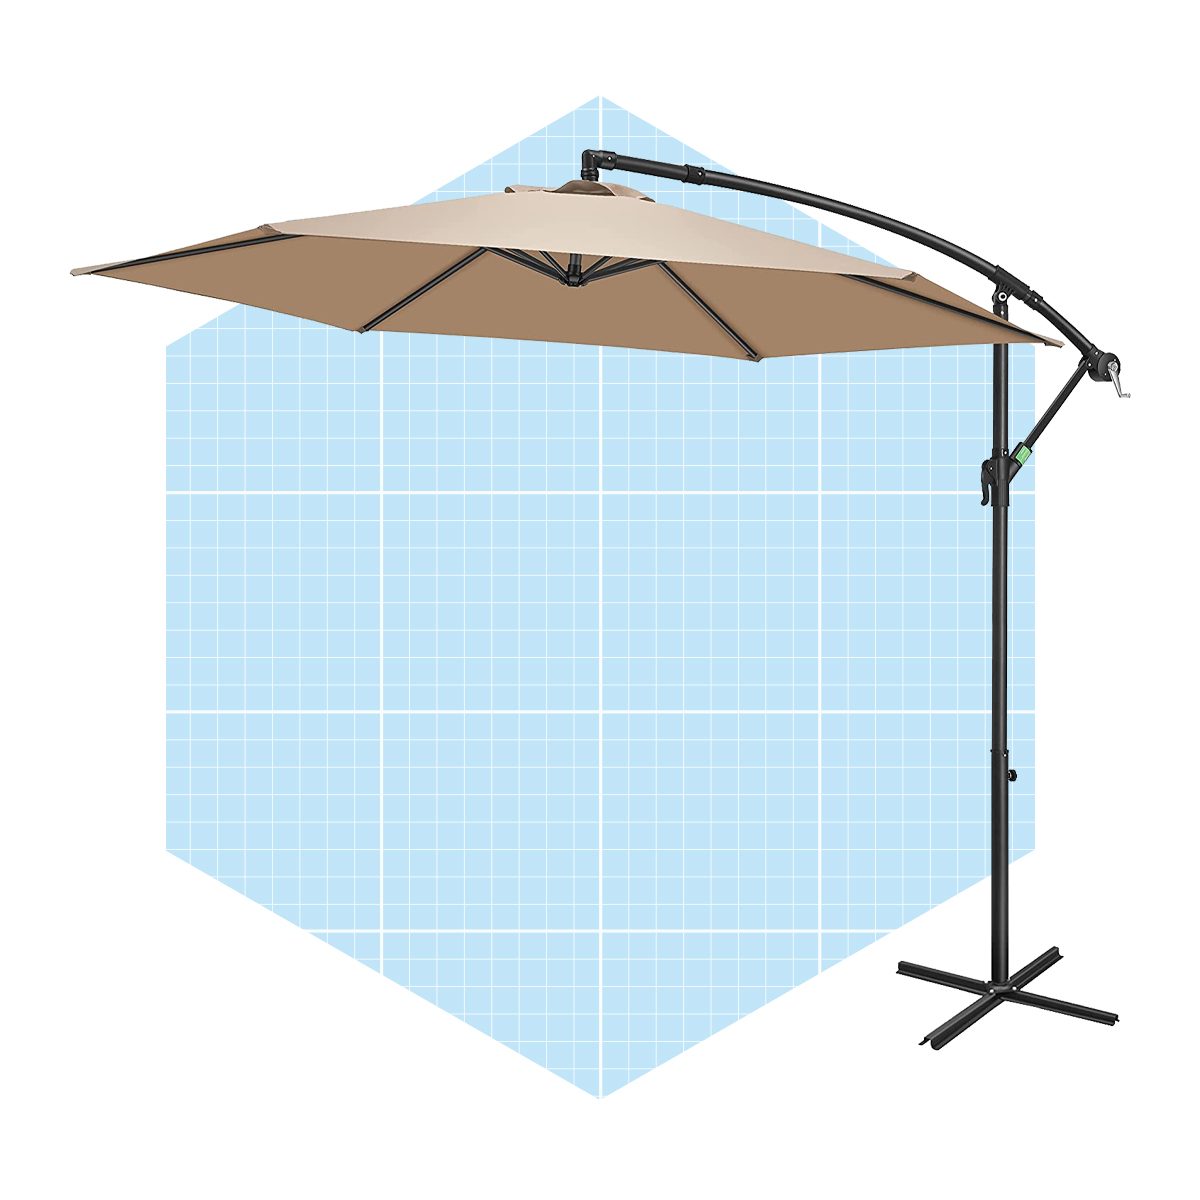 Fruiteam 10ft Patio Offset Cantilever Umbrella Ecomm Amazon.com